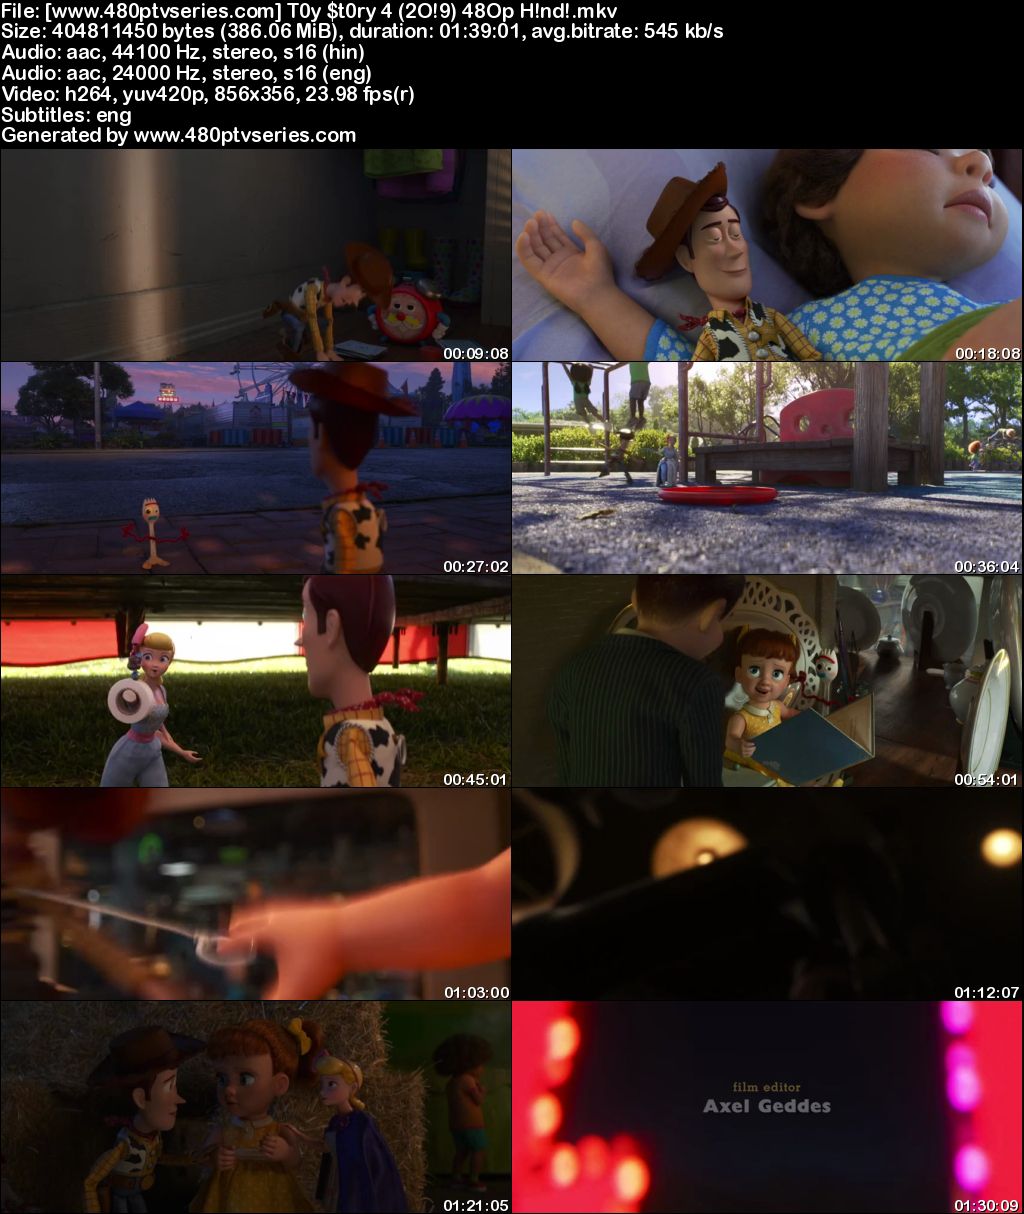 Toy Story 4 (2019) 350MB Full Hindi Dual Audio Movie Download 480p HDRip Free Watch Online Full Movie Download Worldfree4u 9xmovies